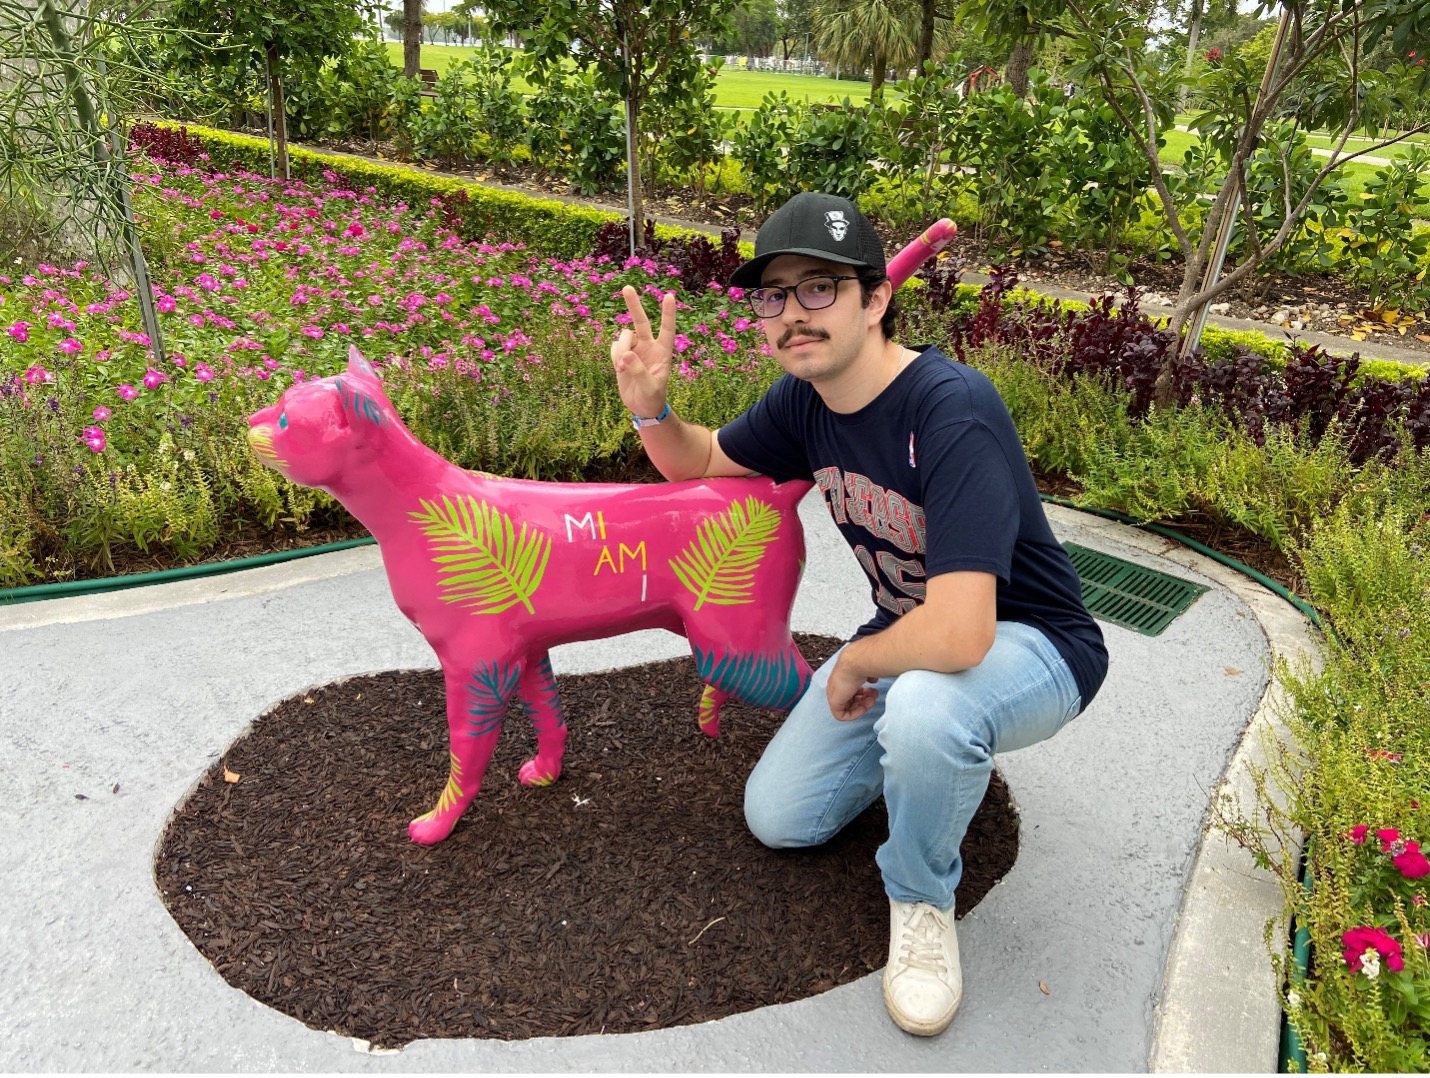 Nicholas Cagliuso posing with an artistic pink cat statue in Miami